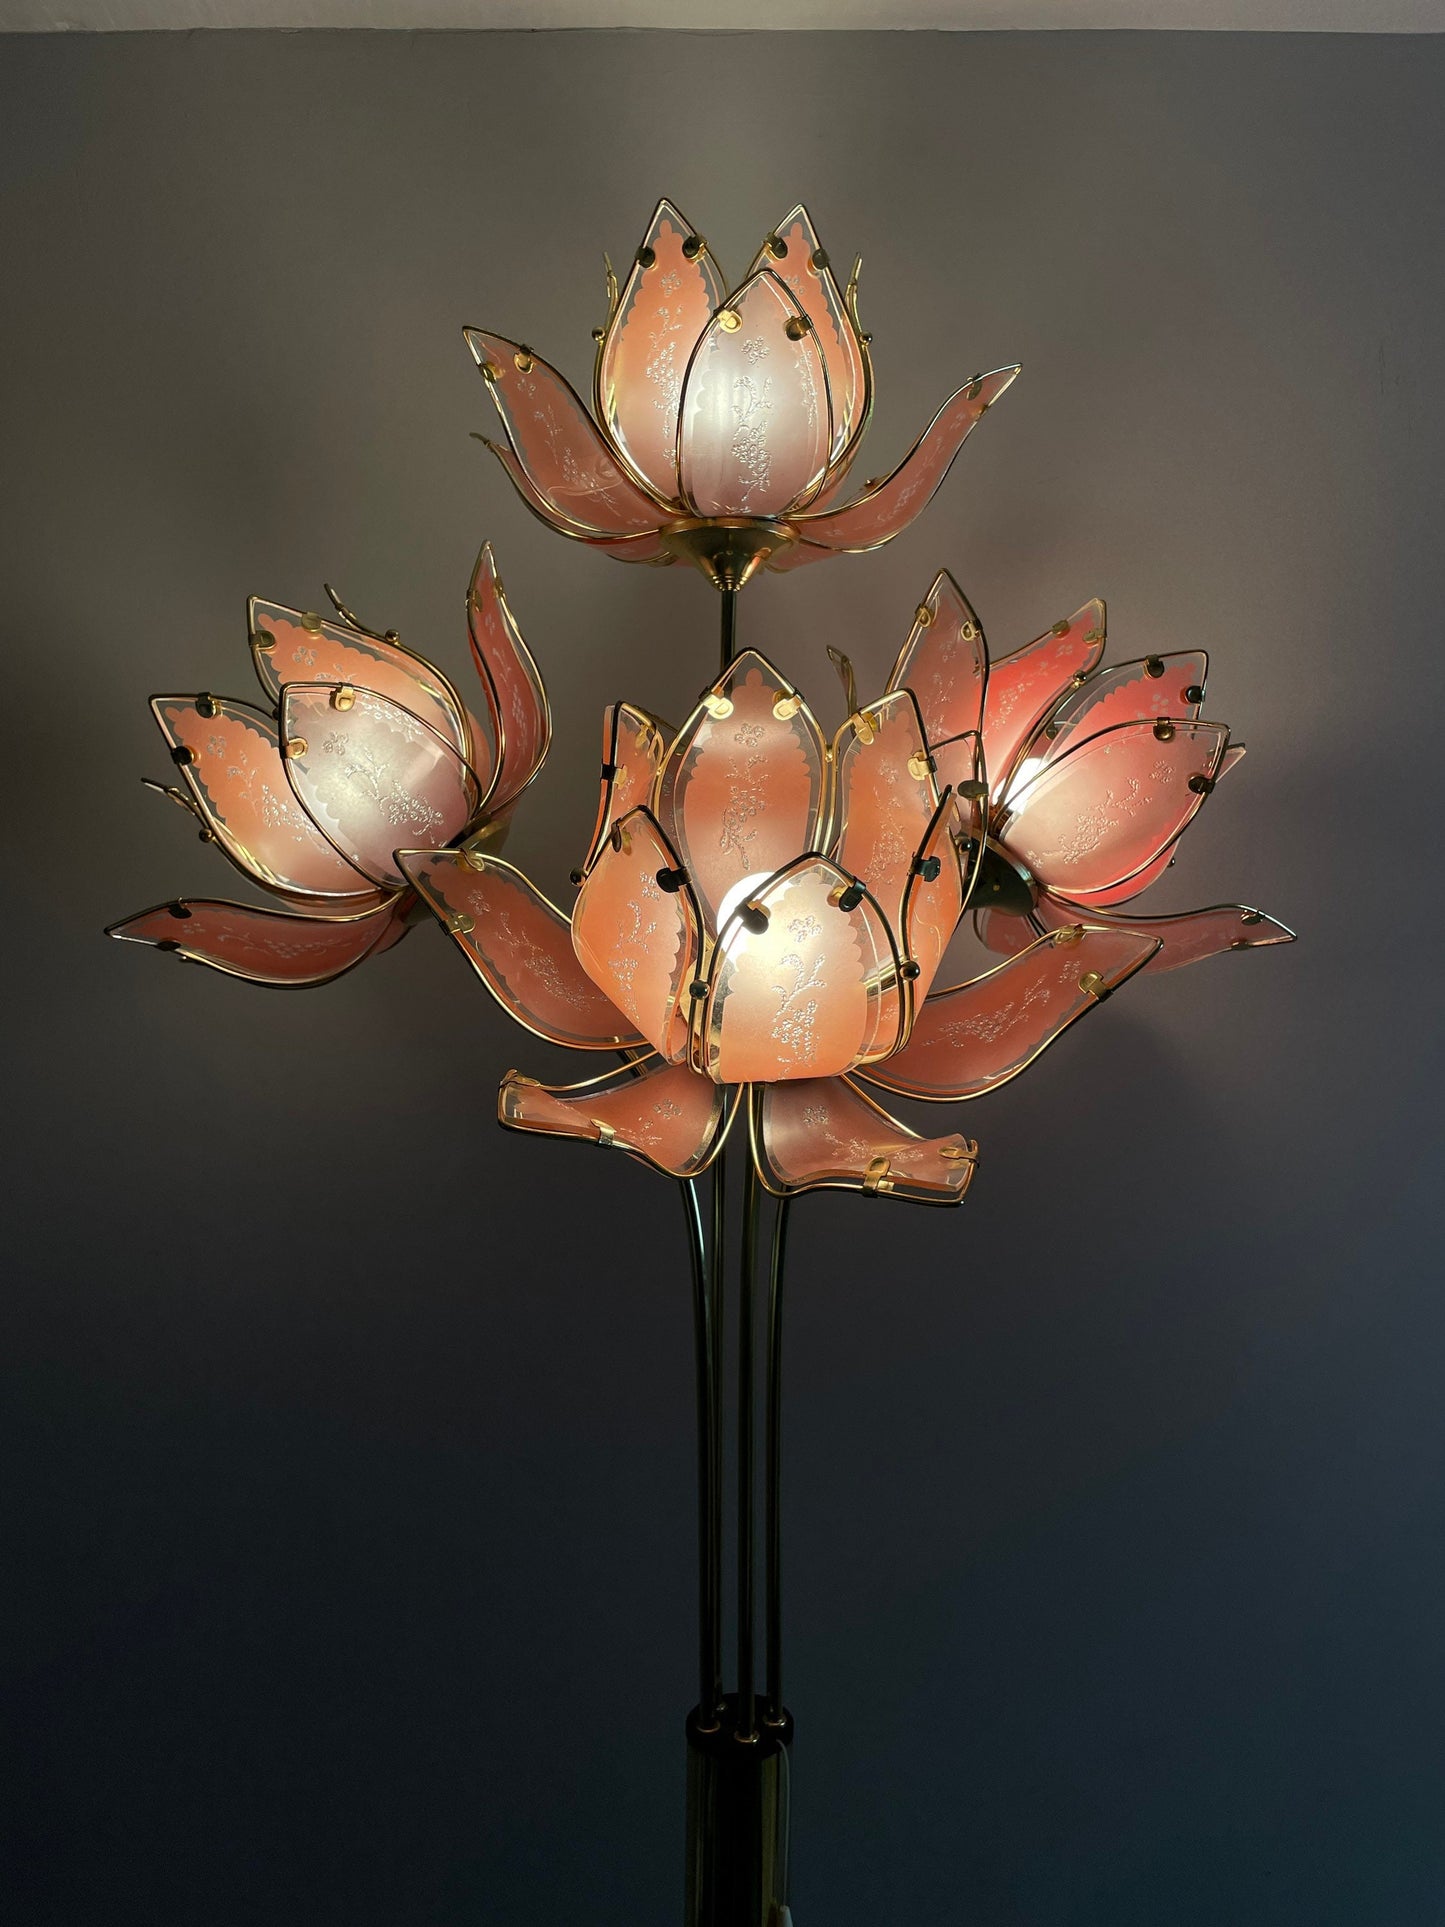 Mid century modern Hollywood Regency tall pink lotus lamp